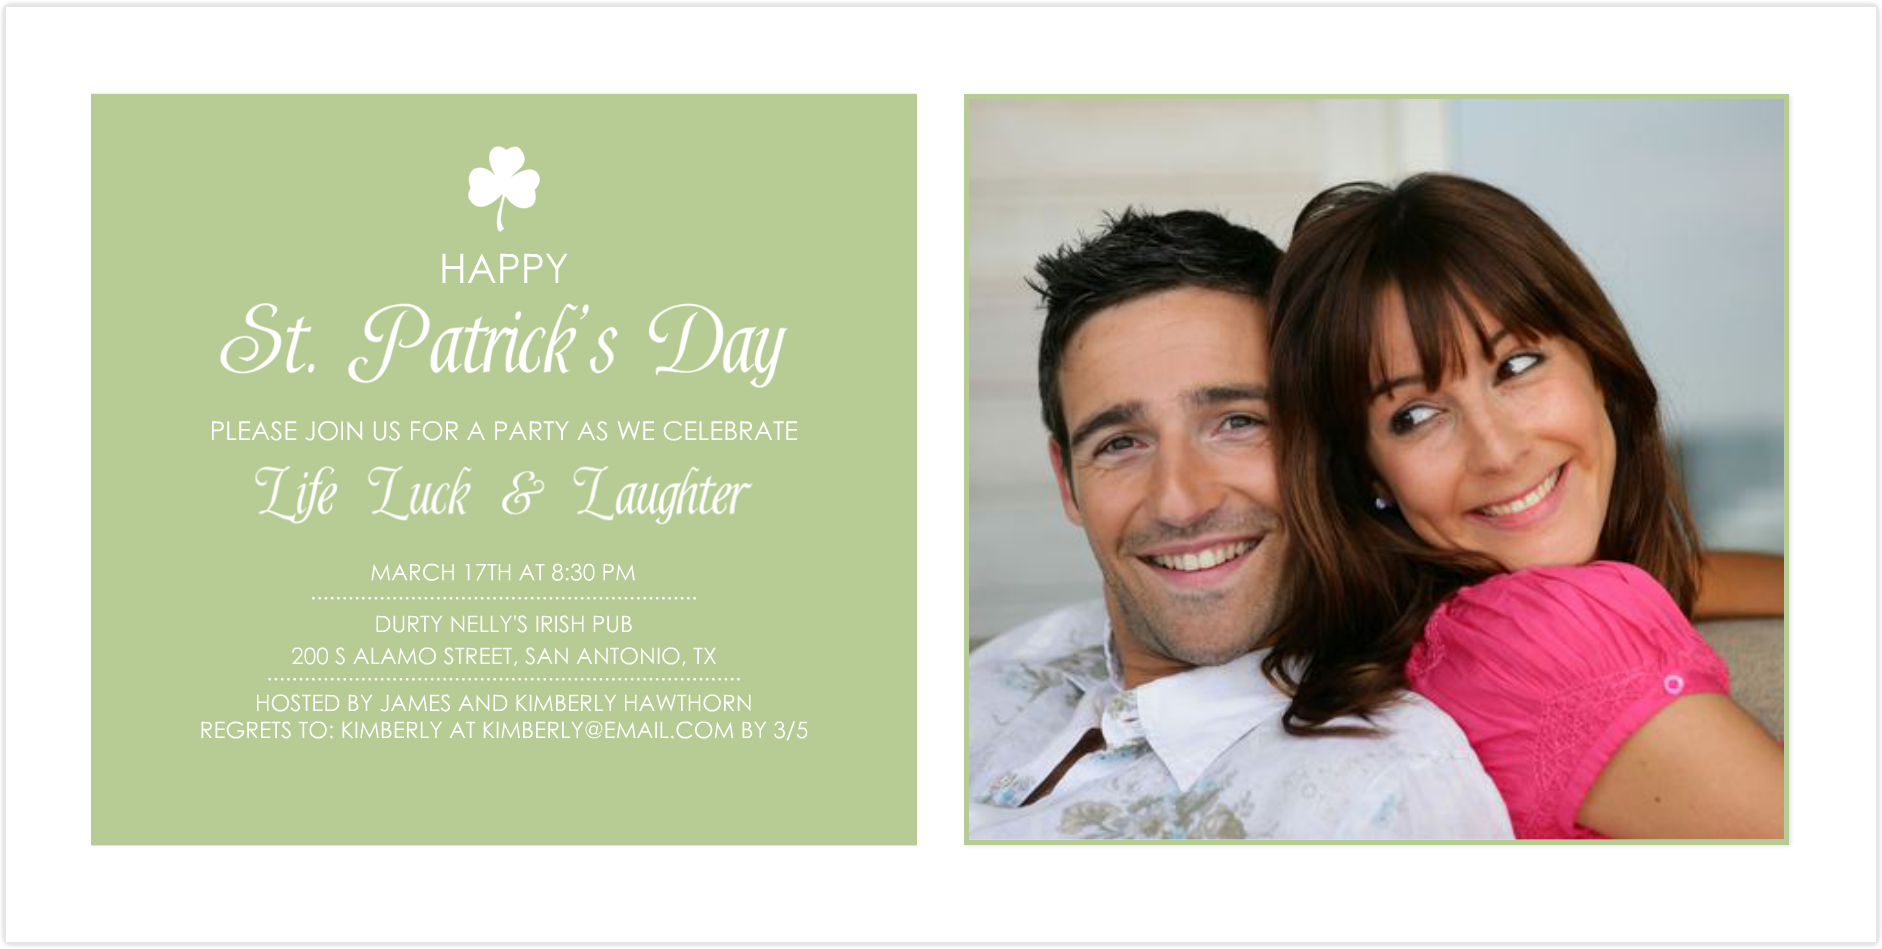 St. Patrick's Day Party Invites